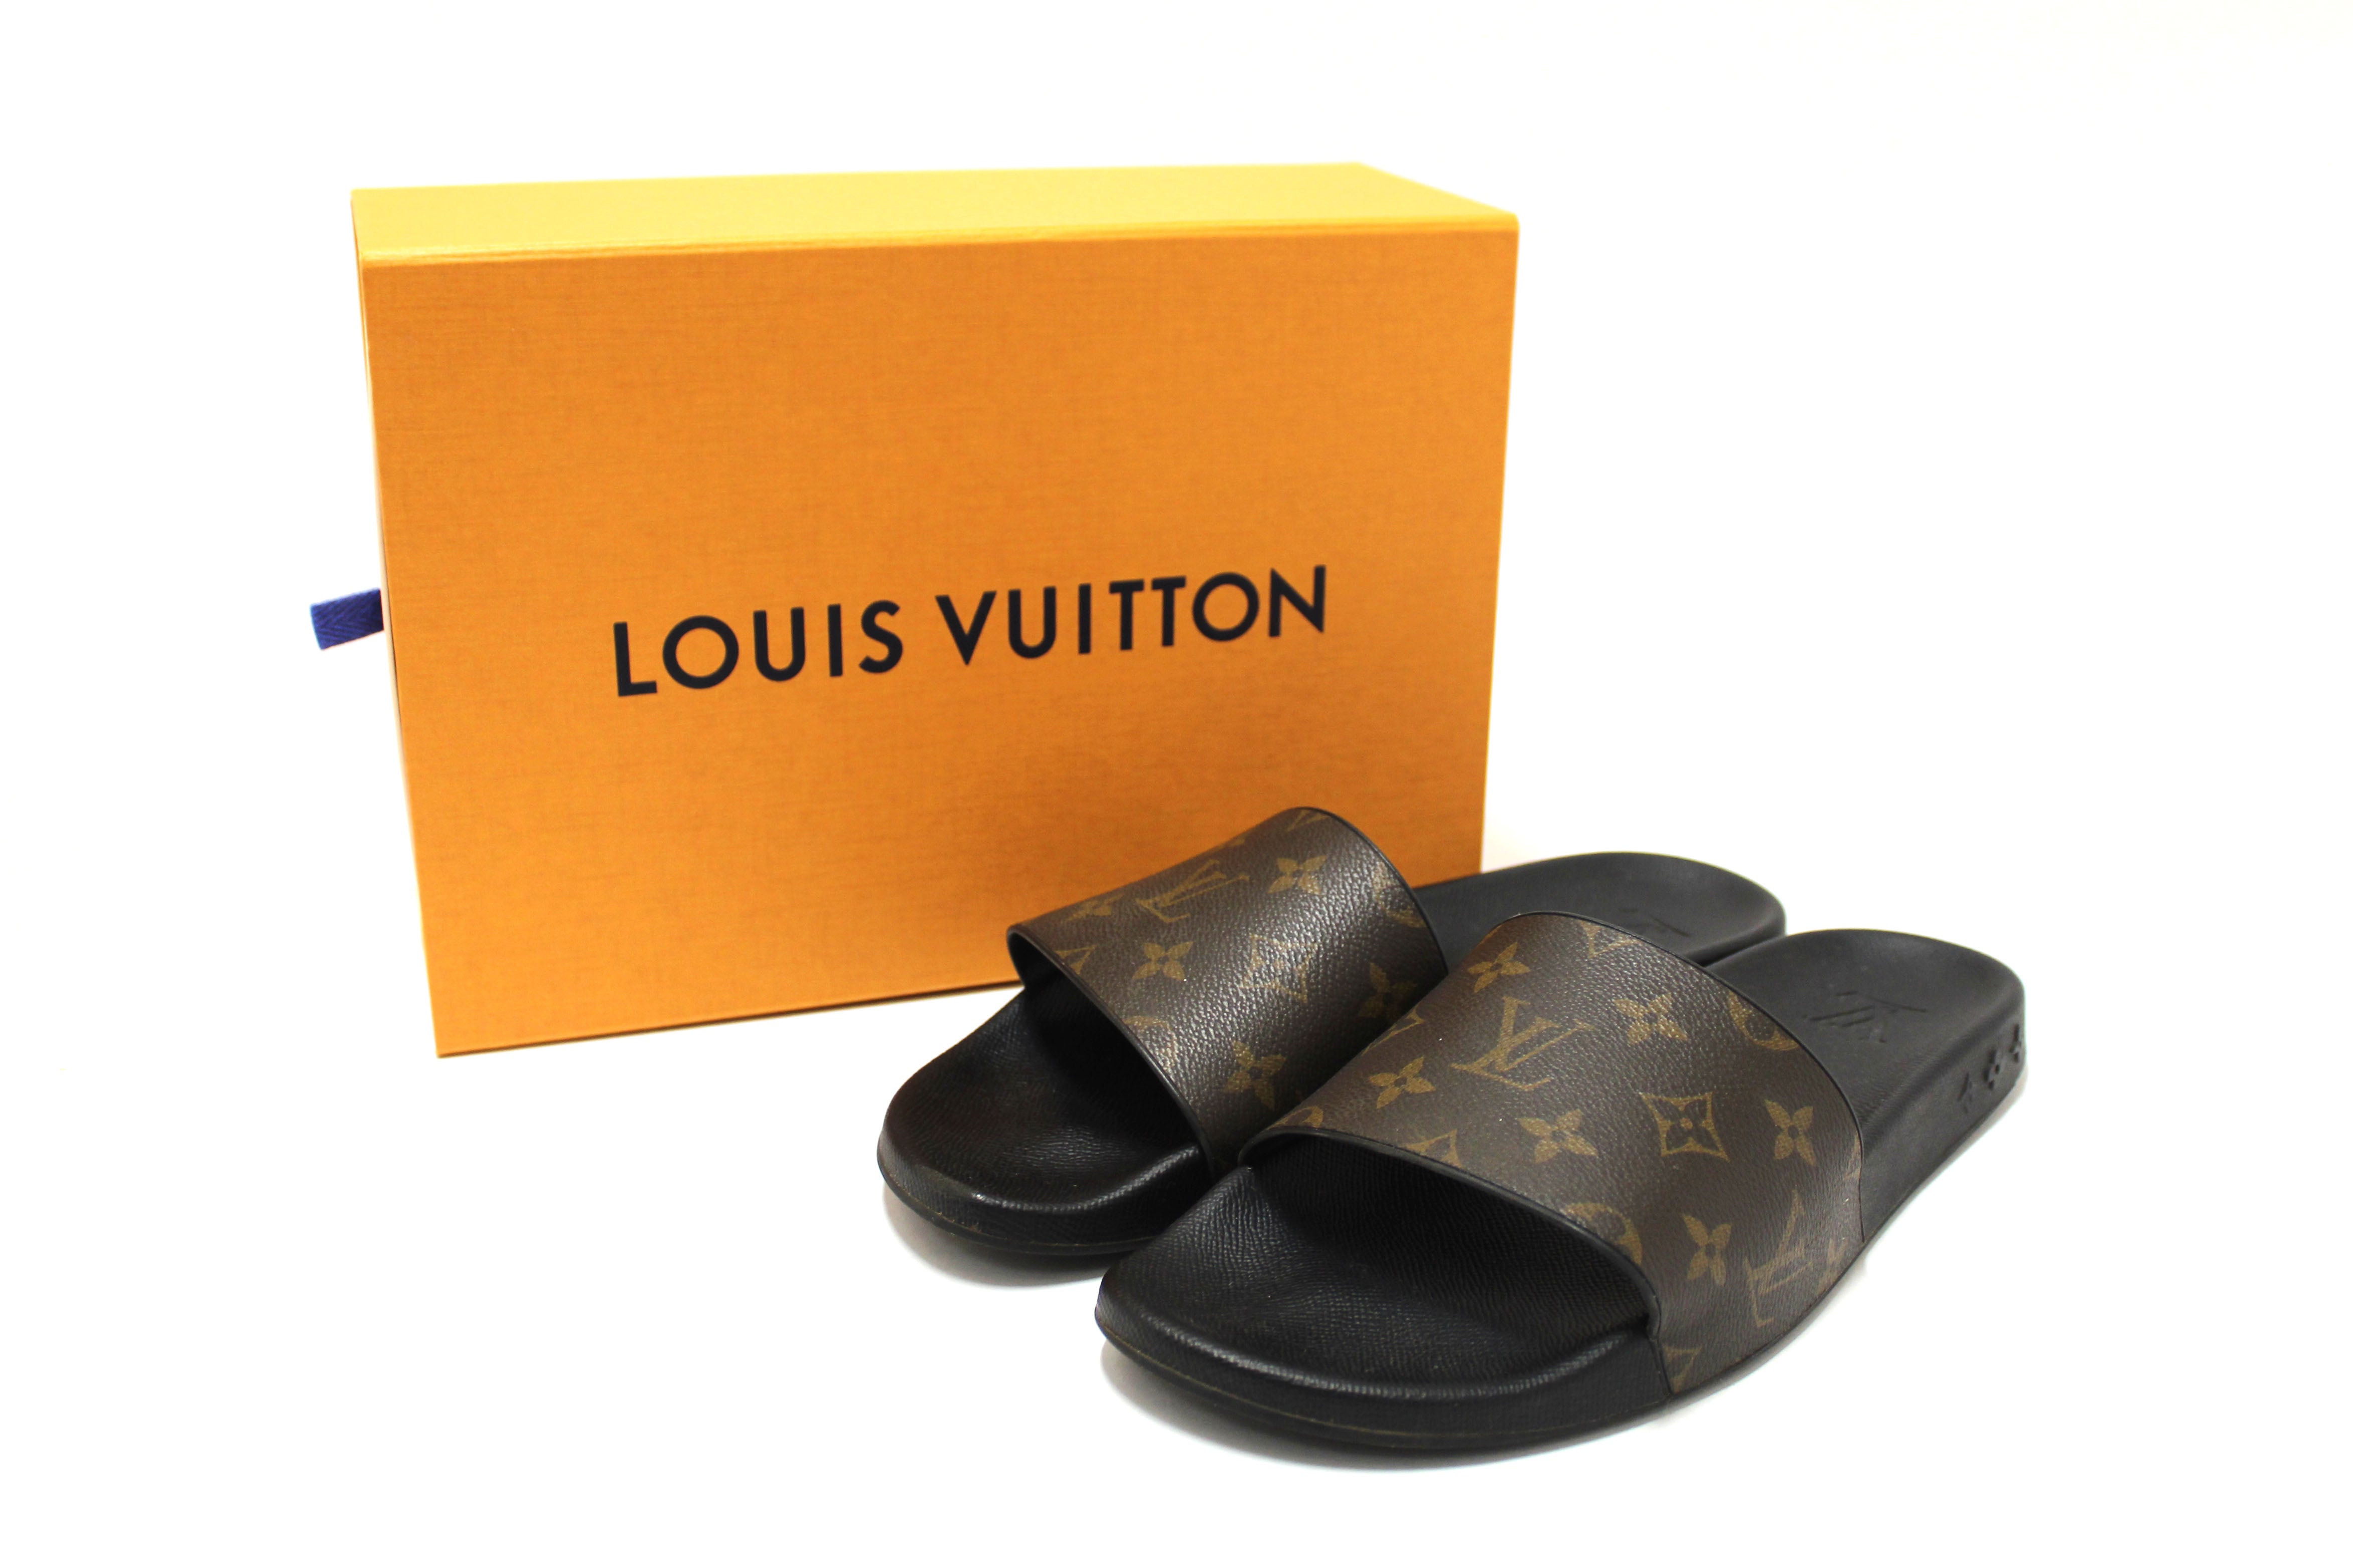 Authentic Louis Vuitton Men's Classic Monogram With Black Leather Waterfront Mule Size 9